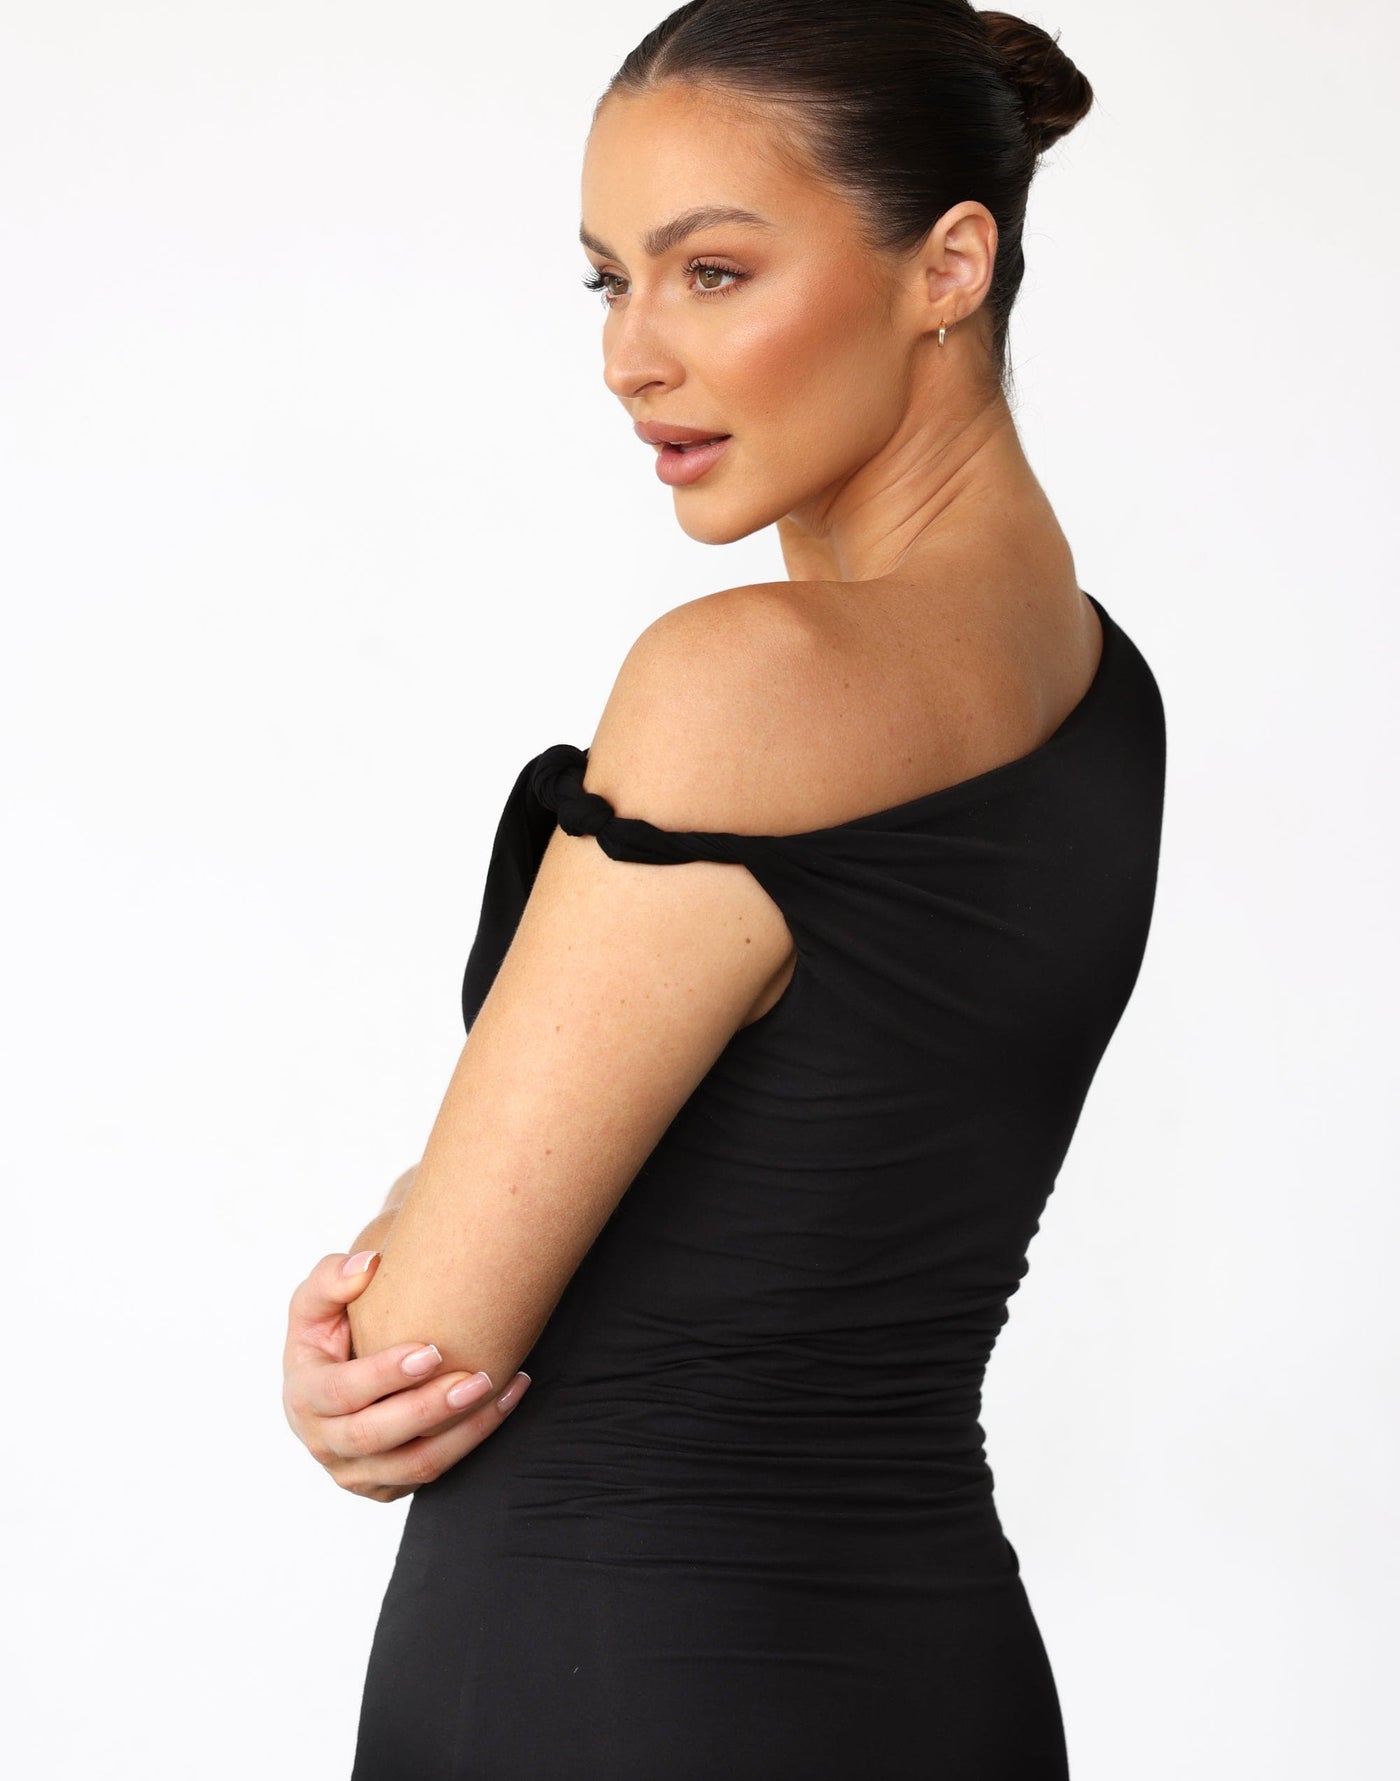 Sahana Maxi Dress (Black) - Twisted Knot Shoulder Jersey Maxi - Women's Dress - Charcoal Clothing